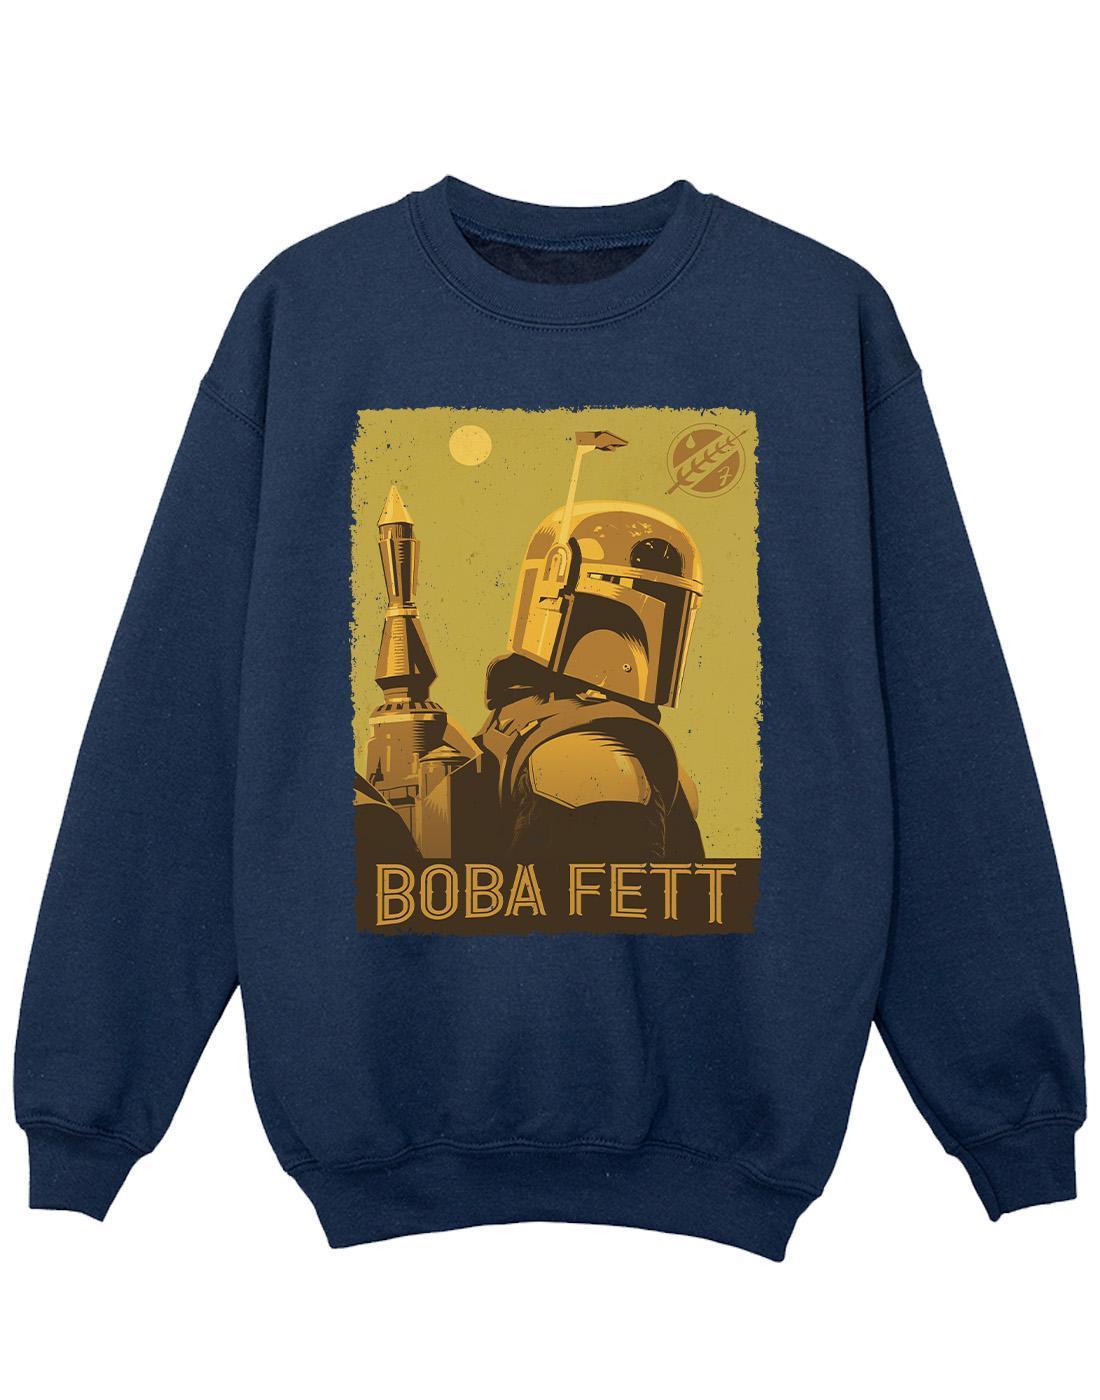 Star Wars Girls The Book Of Boba Fett Planetary Stare Sweatshirt (Navy Blue) (9-11 Years)